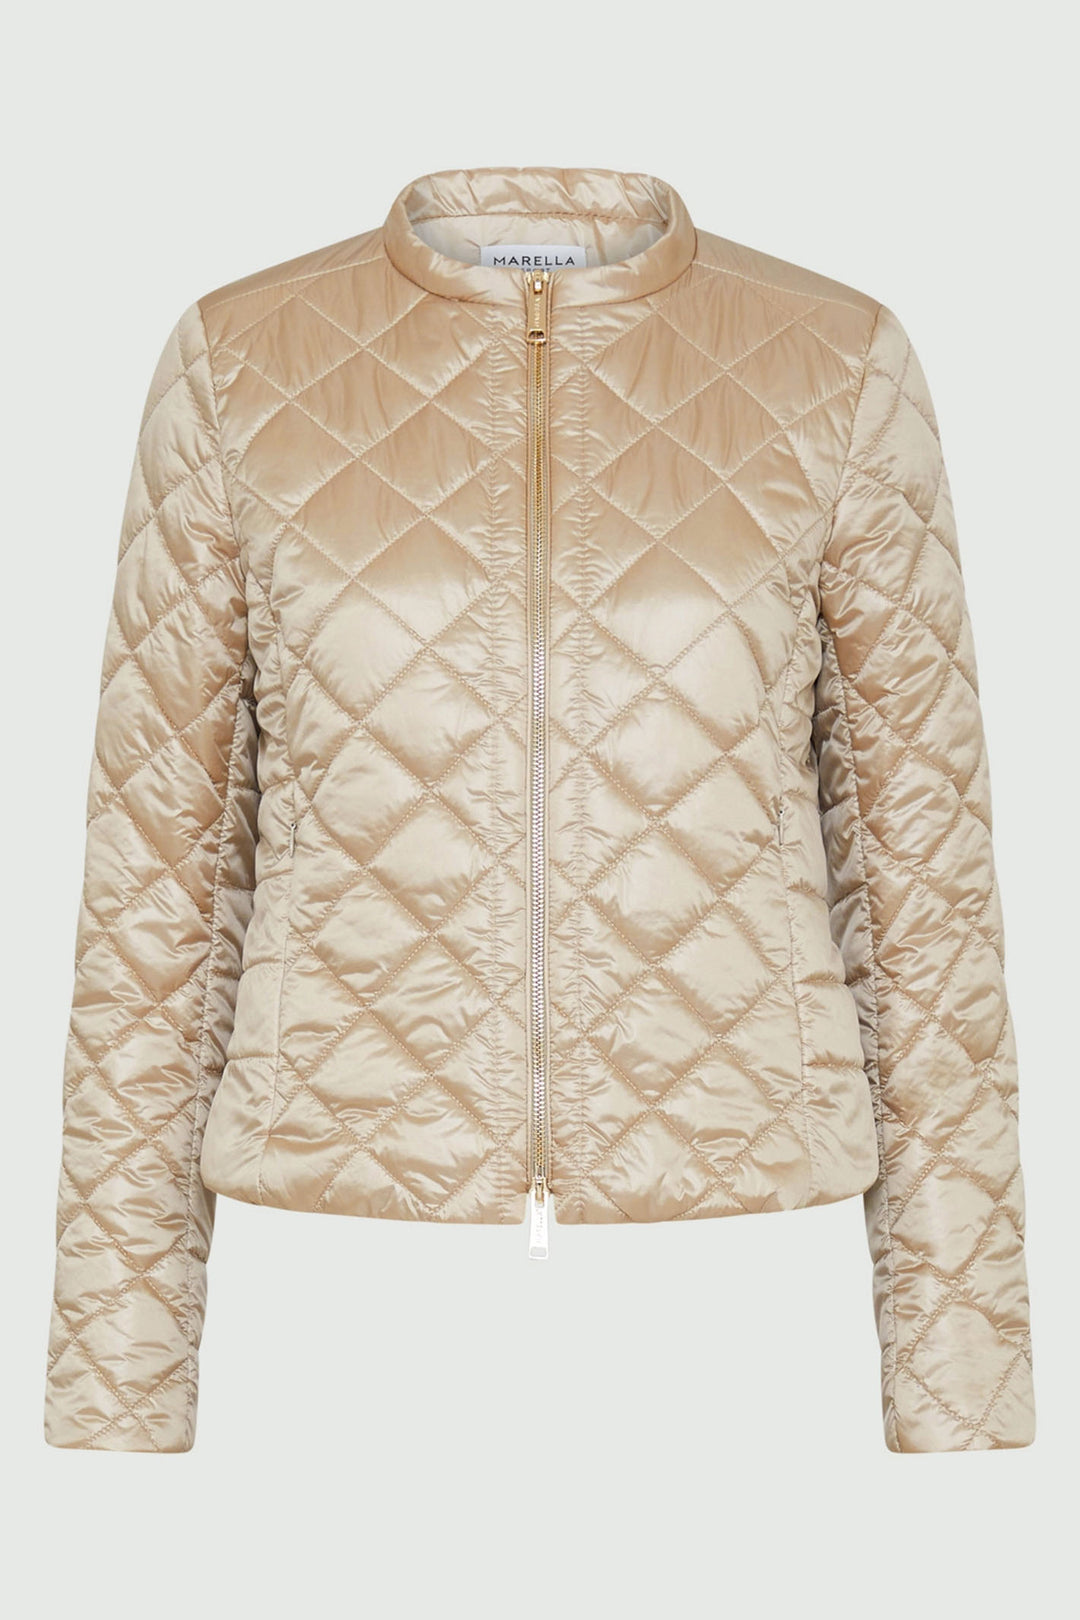 Marella Tosca 2413481014200 Gold Diamond Quilt Jacket - Olivia Grace Fashion